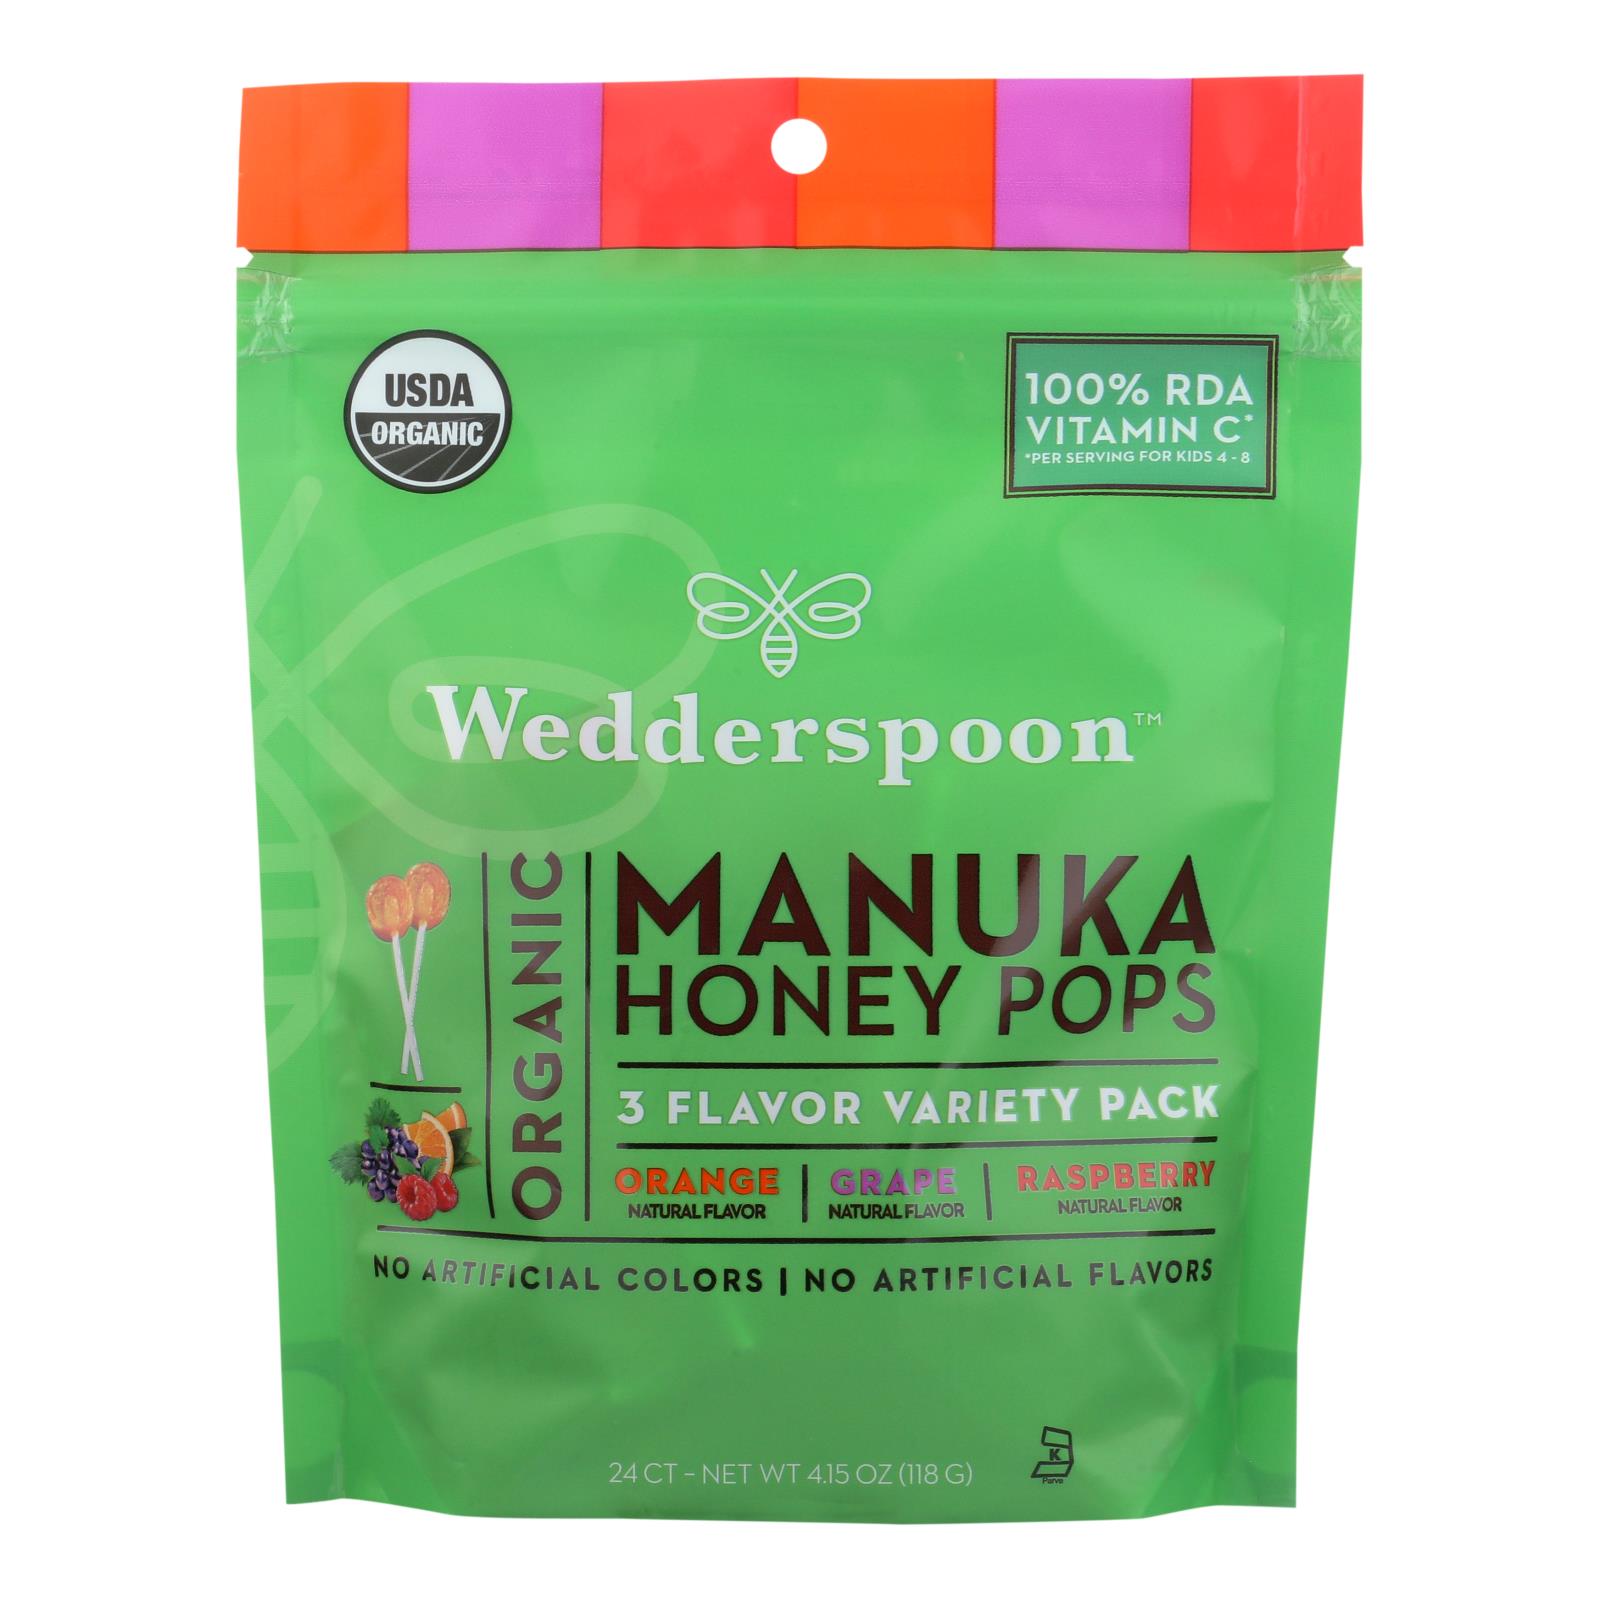 Wedderspoon Organic Makuna Honey Pops - 6개 묶음상품 - 4.15 OZ